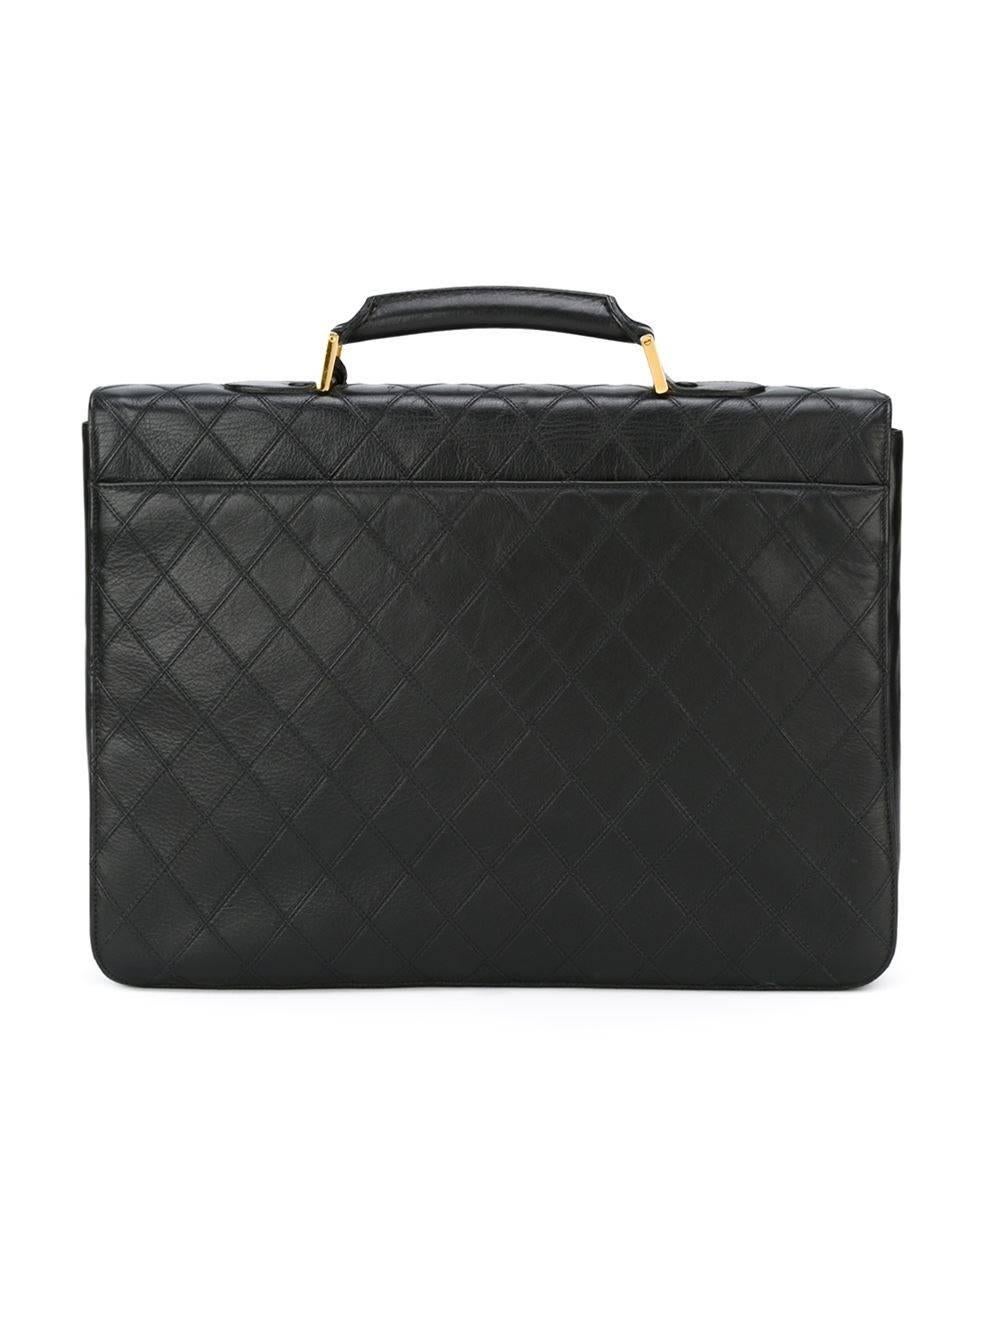 Chanel Black Leather Top Handle Satchel Men's Travel Carryall Briefcase Bag 2